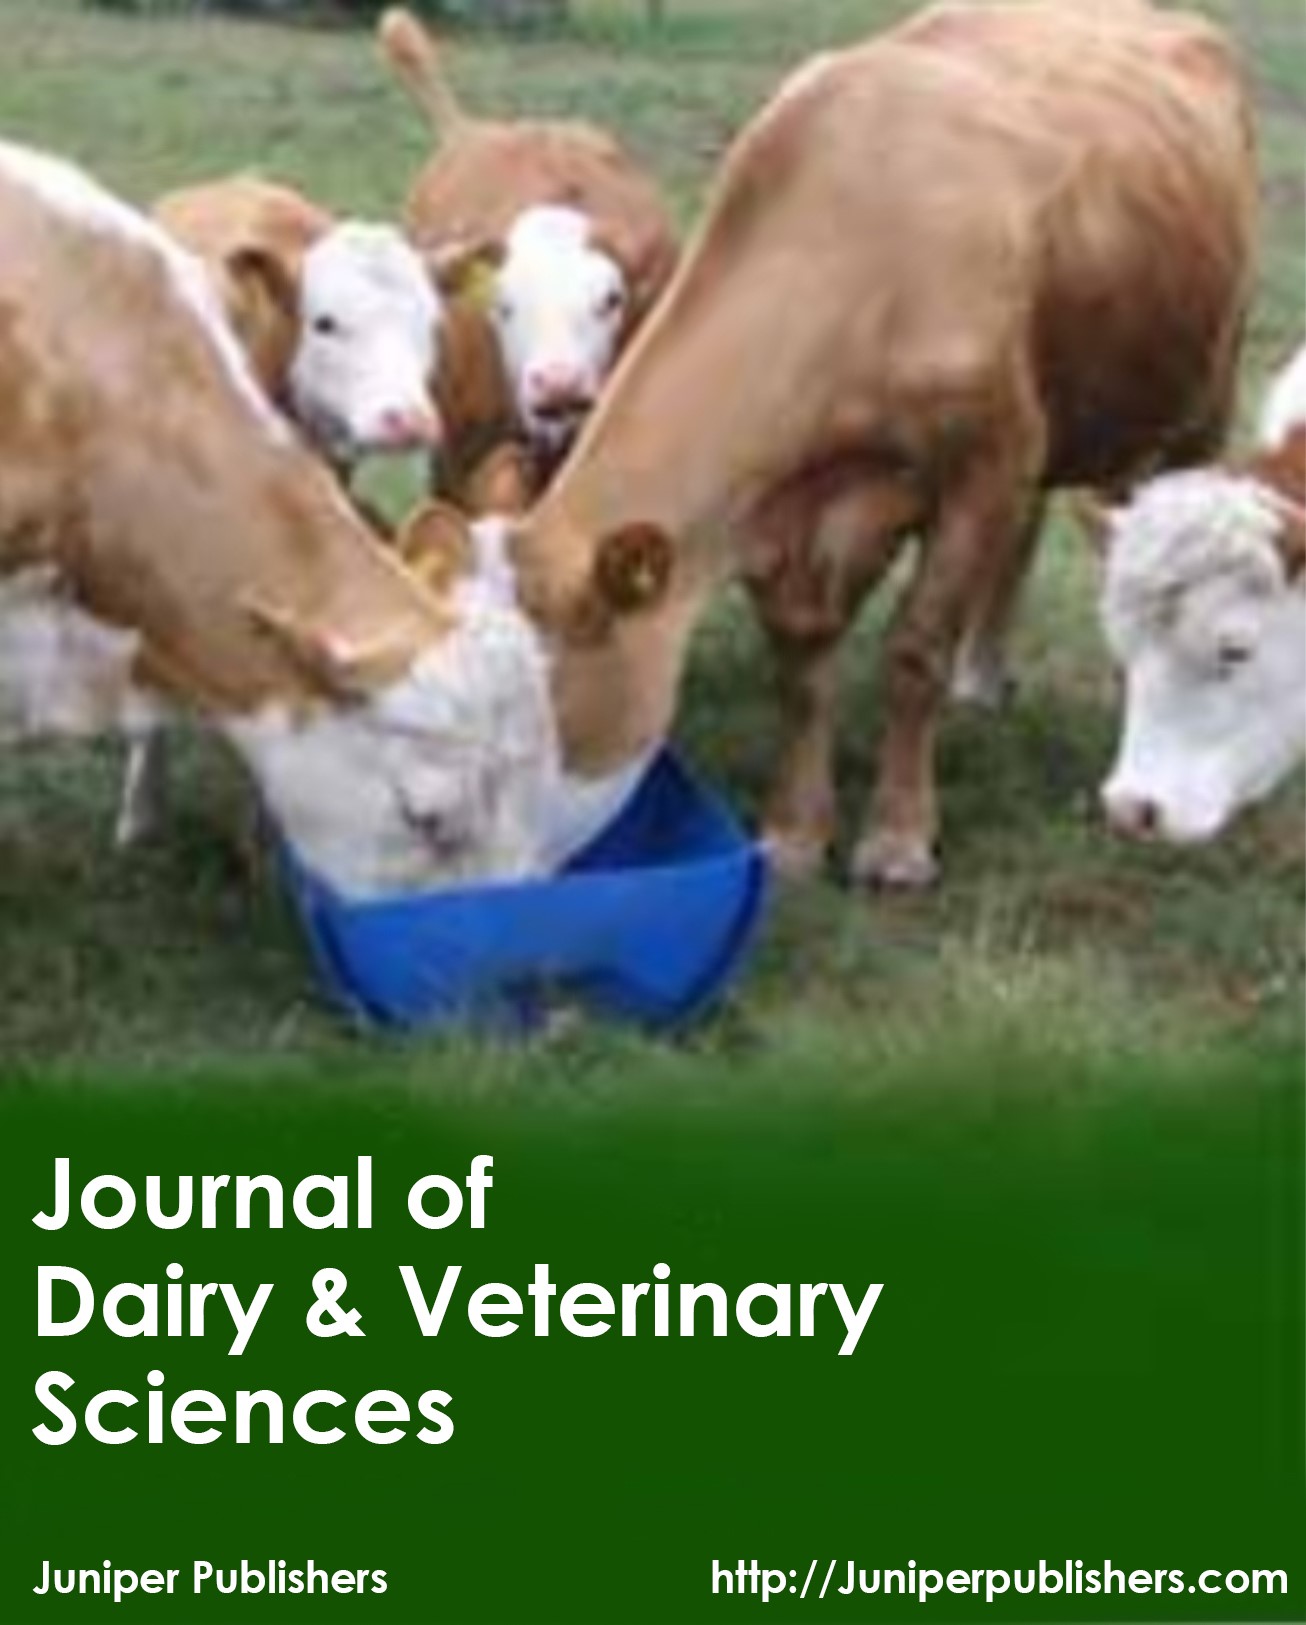 Journal of Dairy & Veterinary Sciences | Juniper Publishers